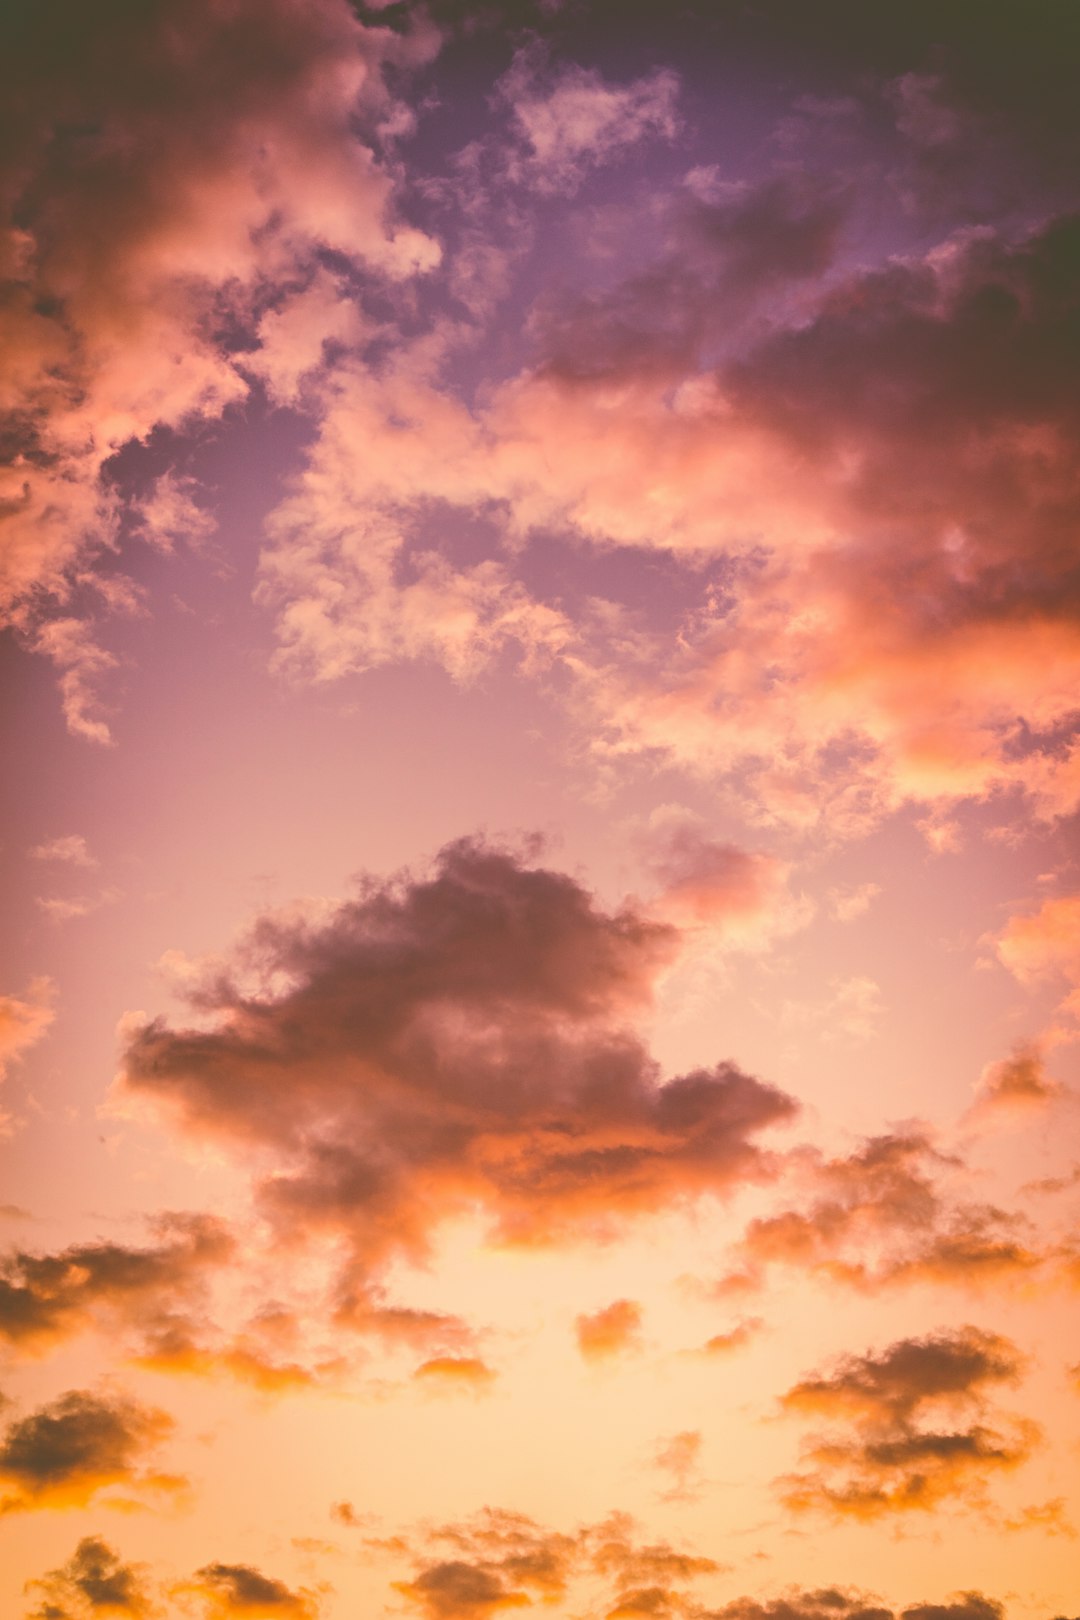 20+ Sunset Images [Stunning!] | Download Free Images on Unsplash